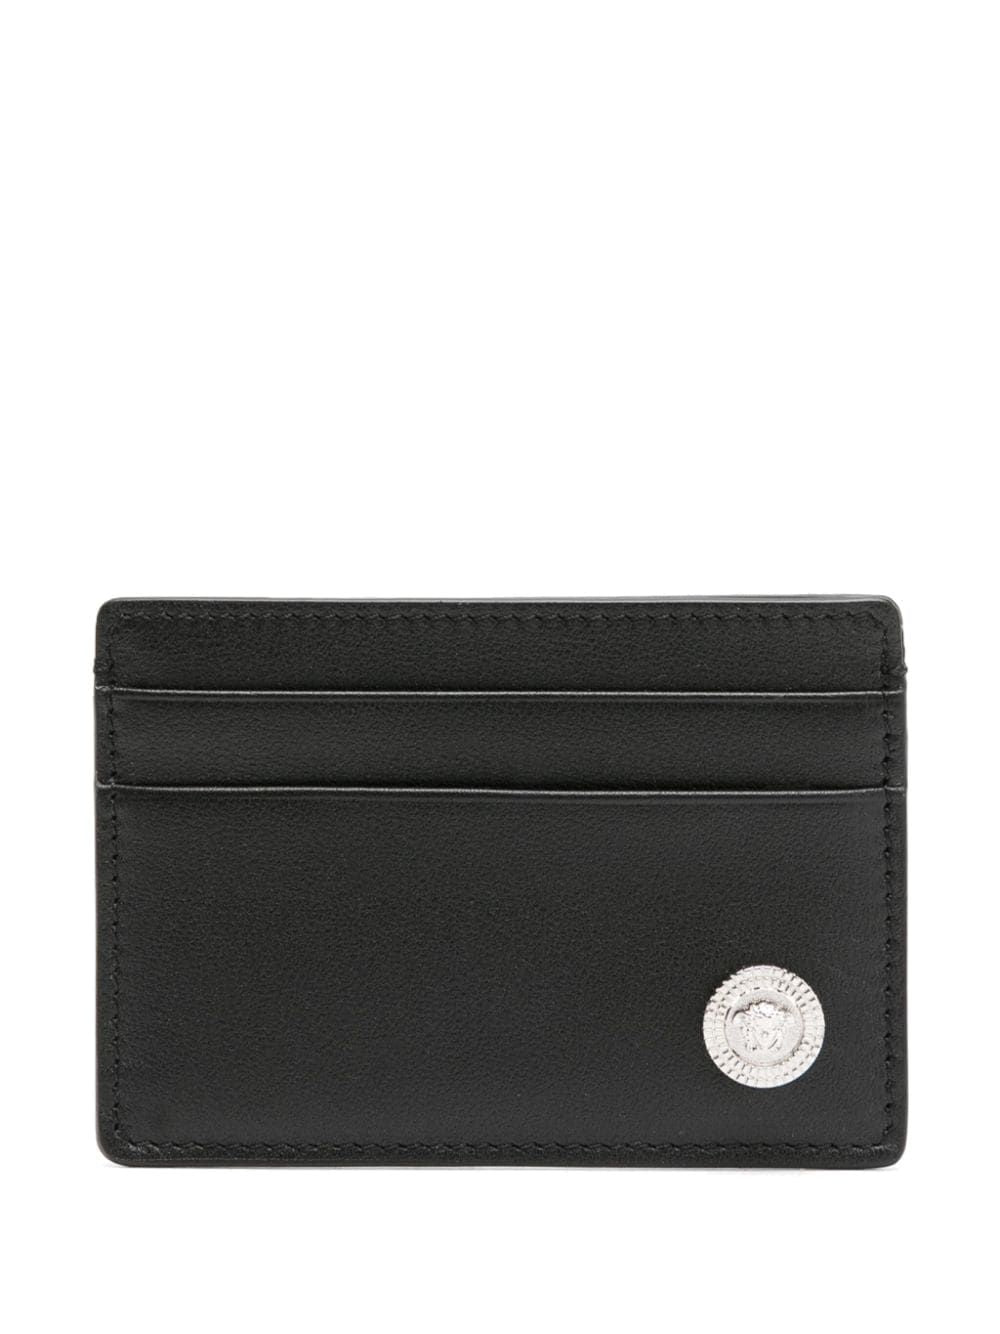 Versace Wallet Black-Palladium